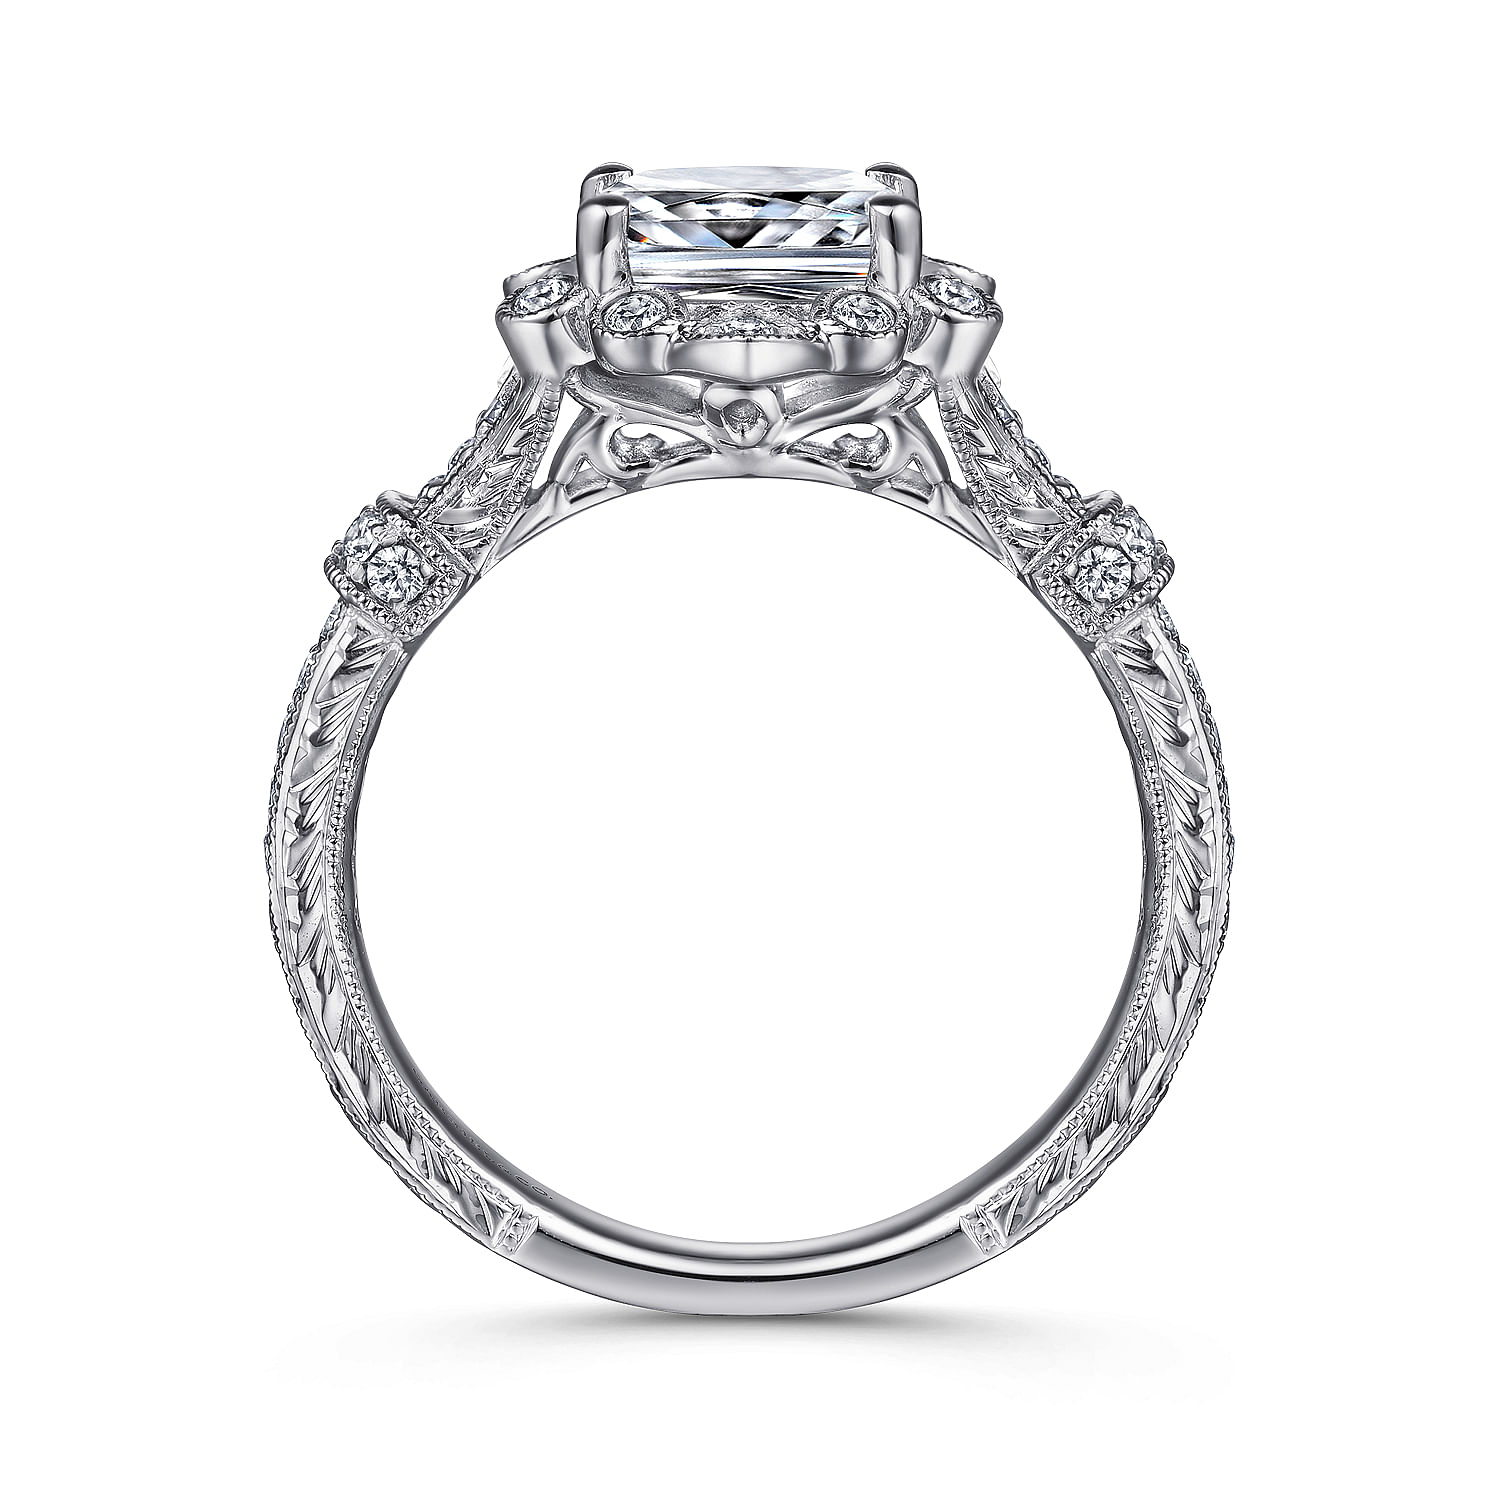 Unique 14K White Gold Vintage Inspired Cushion Cut Halo Diamond Engagement Ring